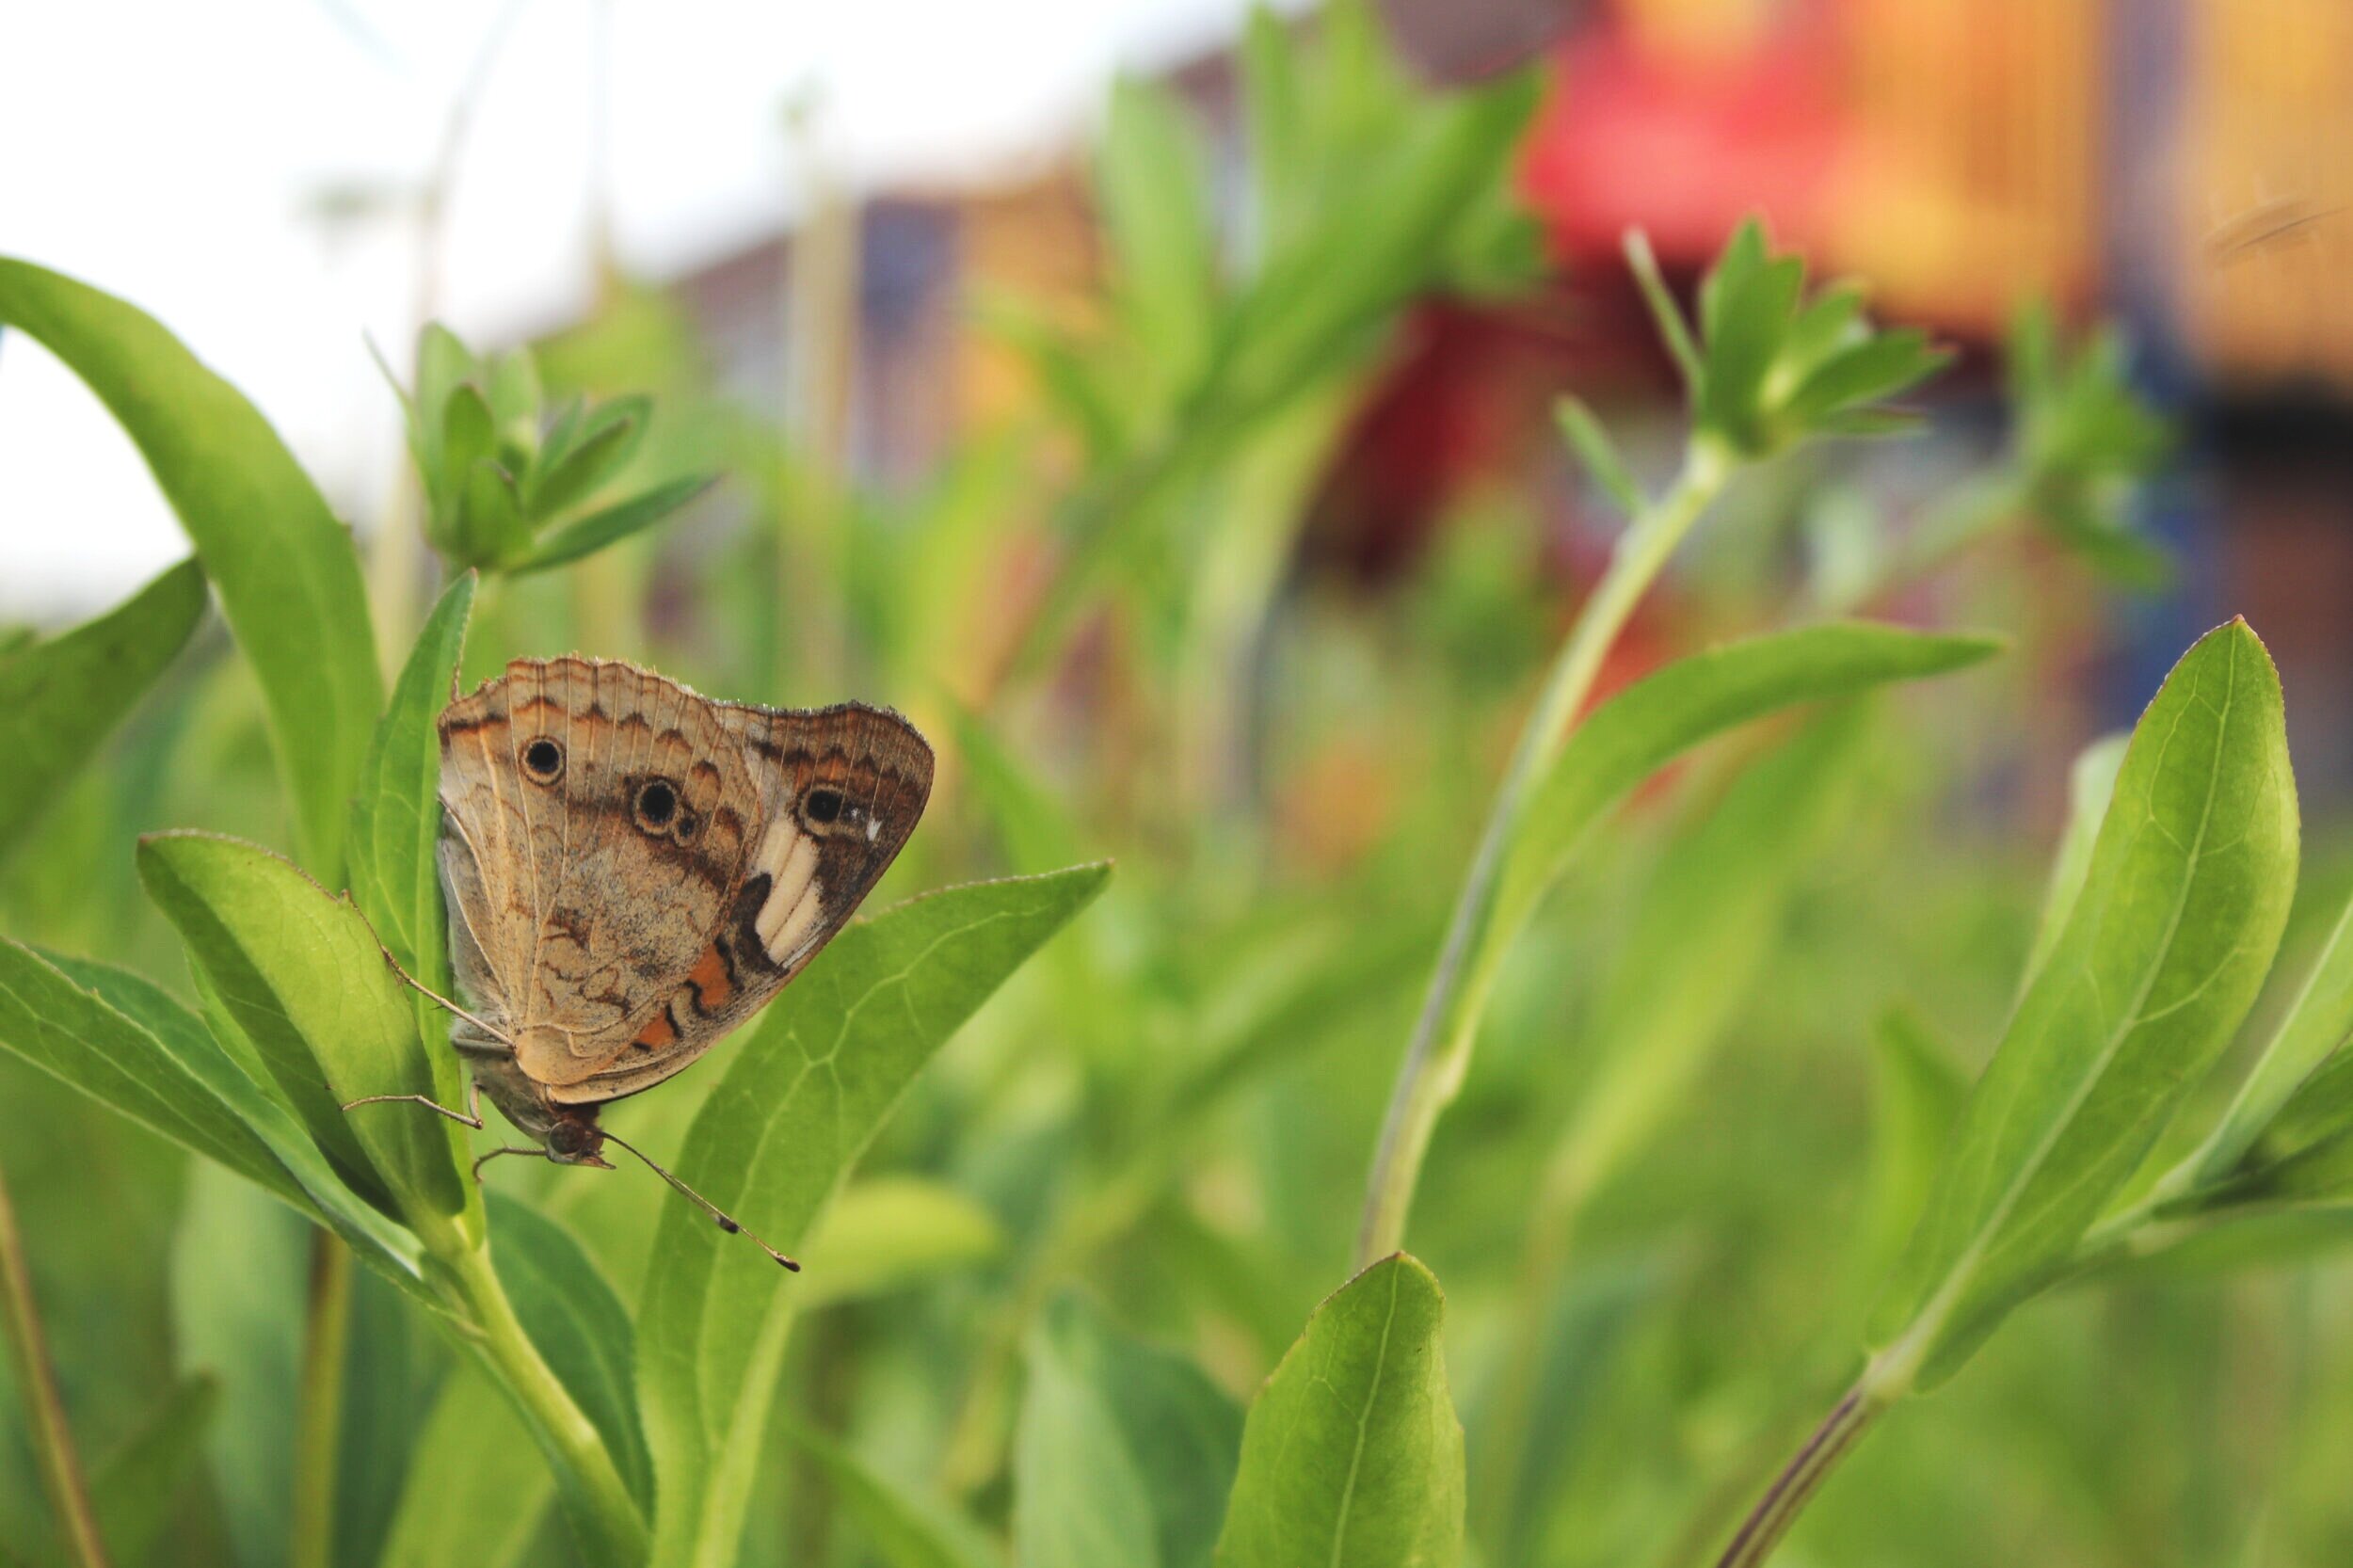 Common Buckeye Butterfly in Urban Schoolyard Habitat